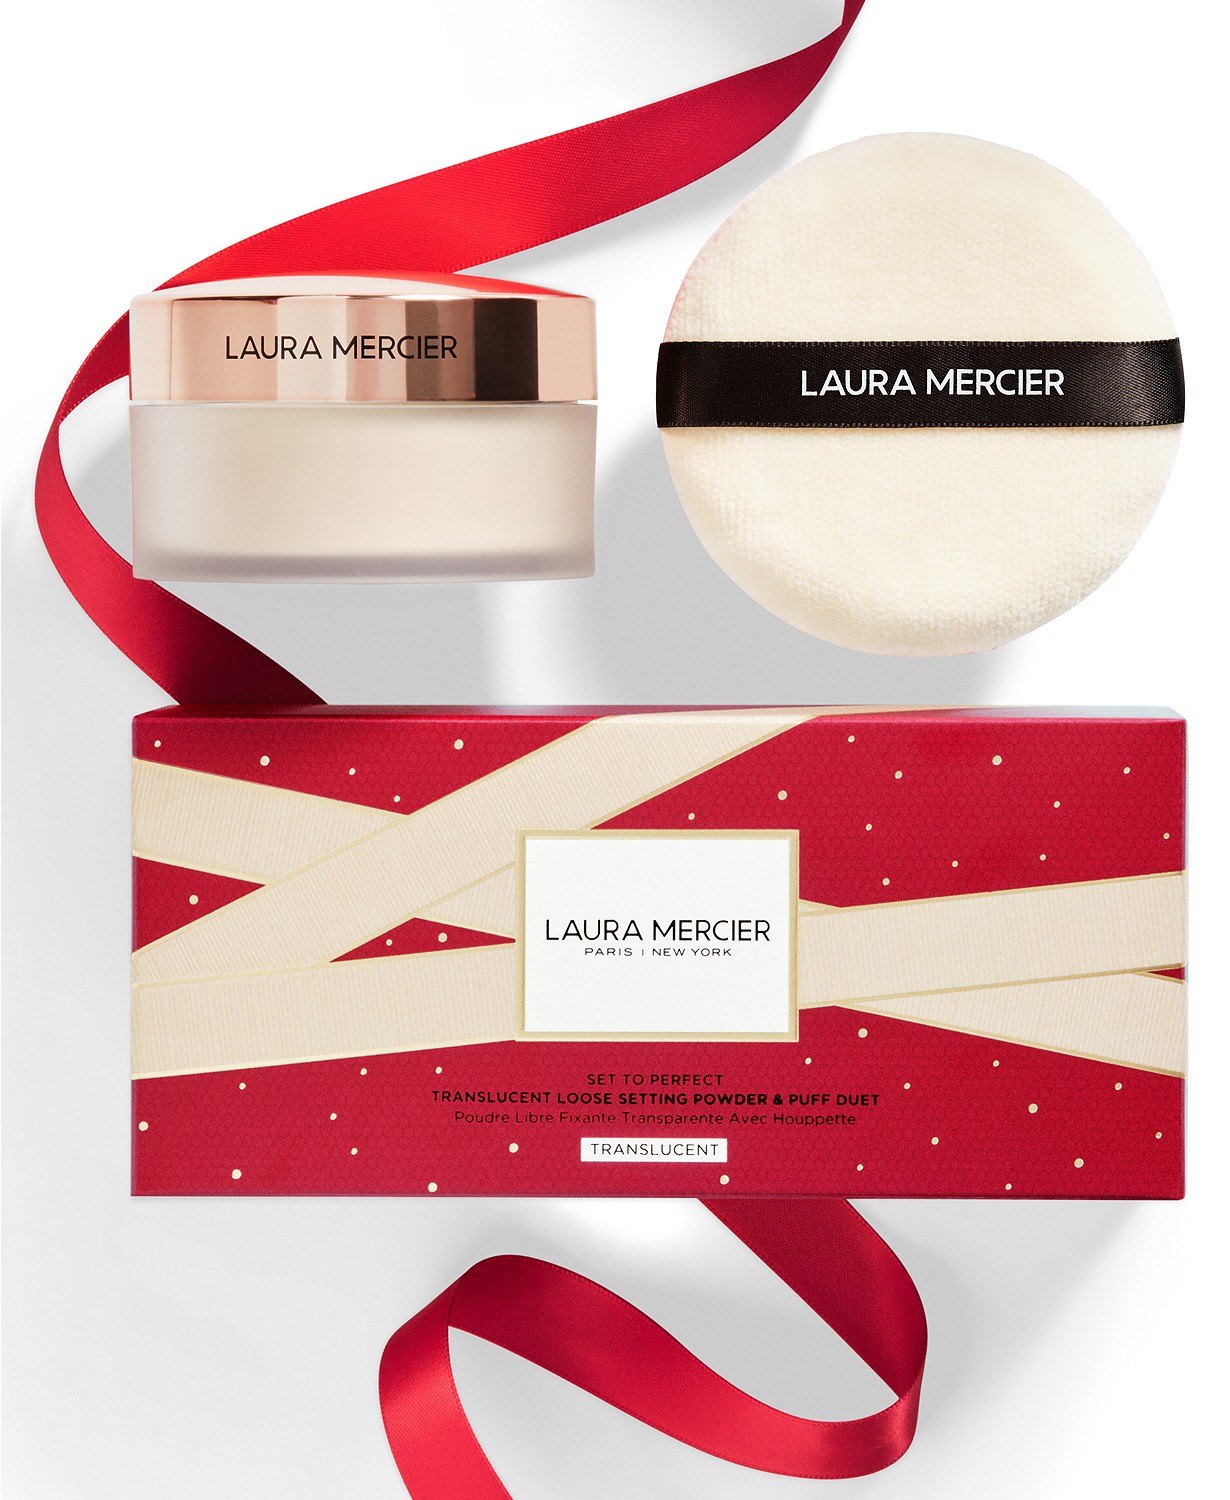 Laura Mercier Set To Perfect Translucent Loose Setting Powder & Puff Duet (Limited Edition) เซ็ตแป้งฝุ่งคุมมันตัวดัง มาพร้อมกับพัฟทาแป้งในกล่อง